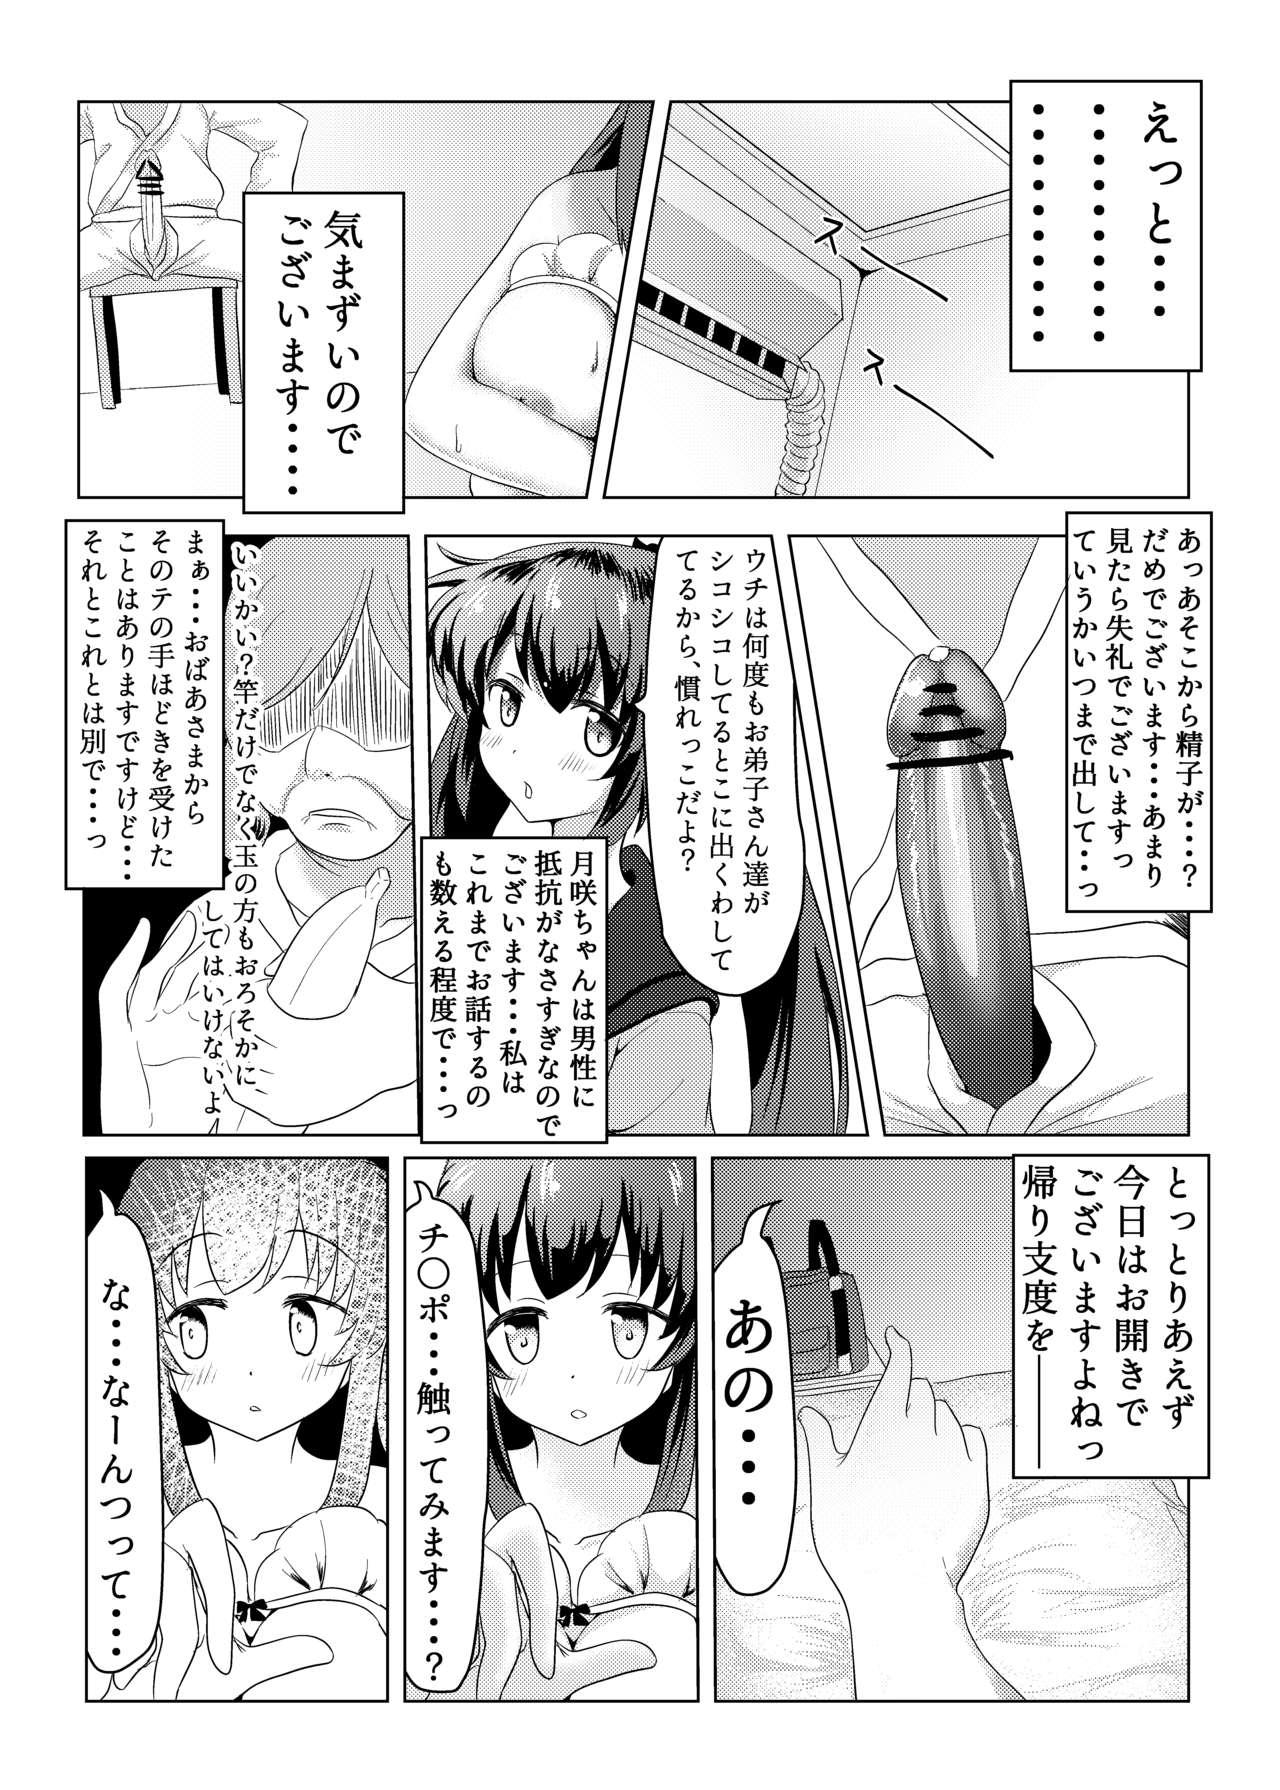 Teamskeet Tsukuyo ga Waruinodegozaimasu - Puella magi madoka magica side story magia record Fat Pussy - Page 8